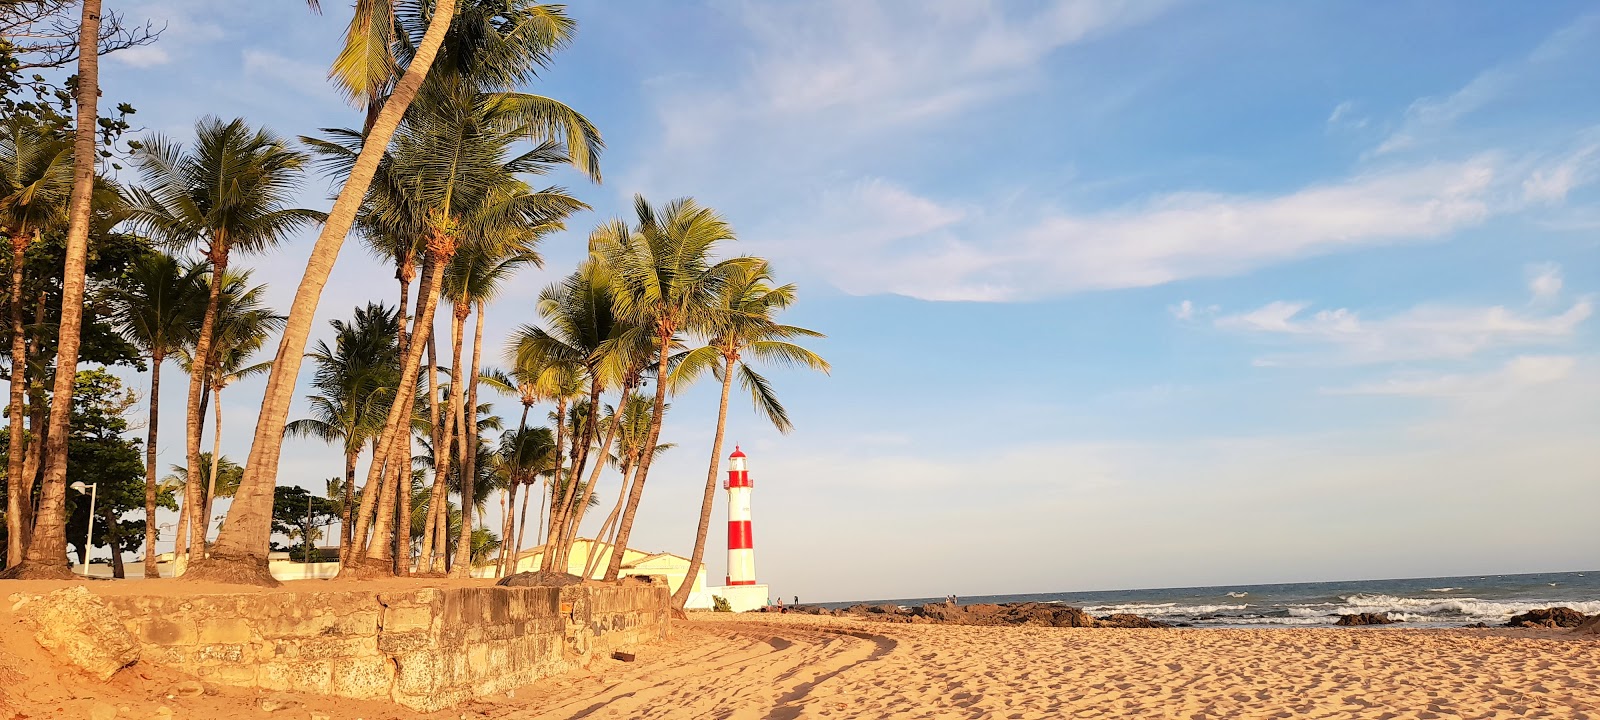 Photo of Farol de Itapua Beach - popular place among relax connoisseurs